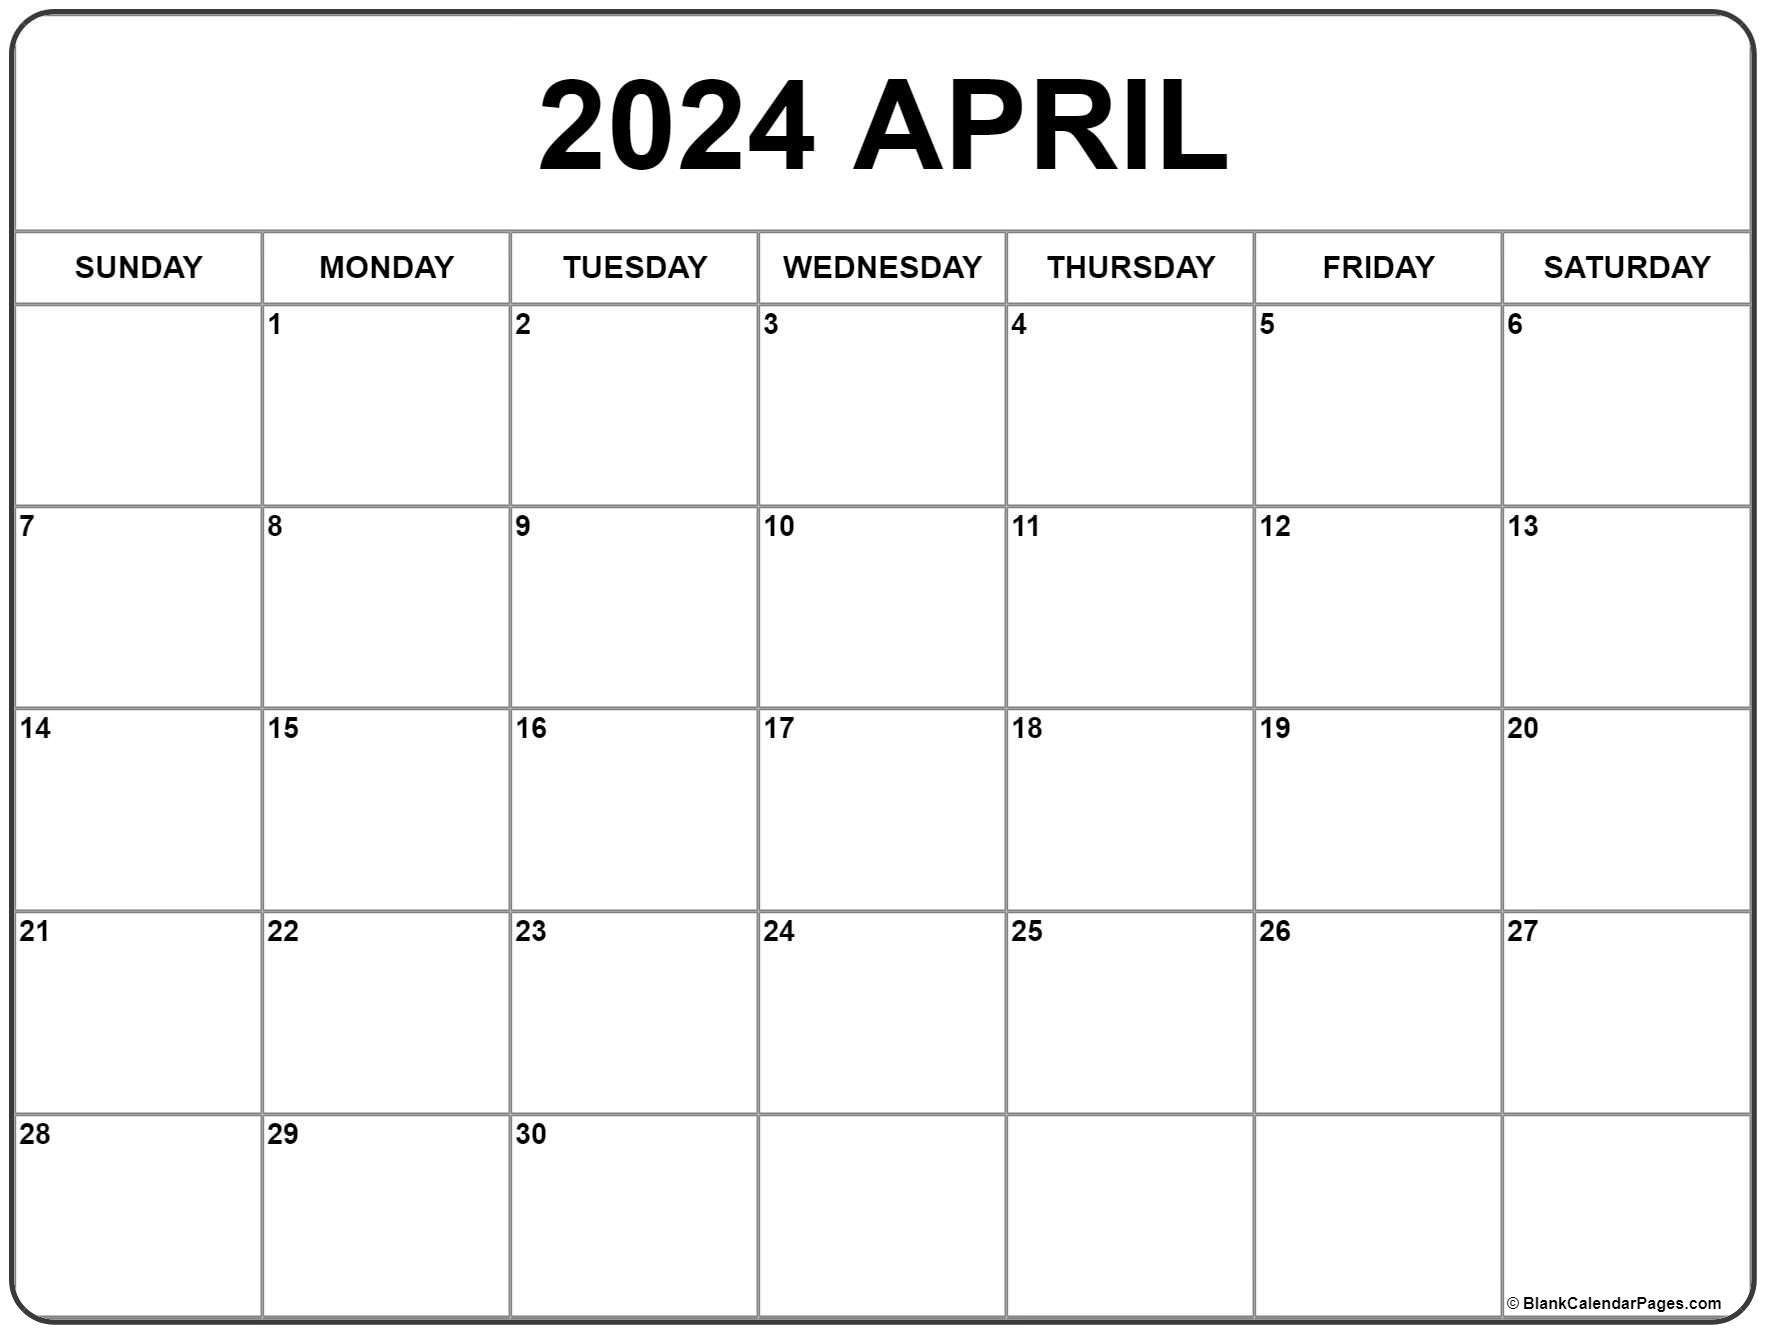 April 2024 Calendar | Free Printable Calendar | Printable Calendar 2024 April